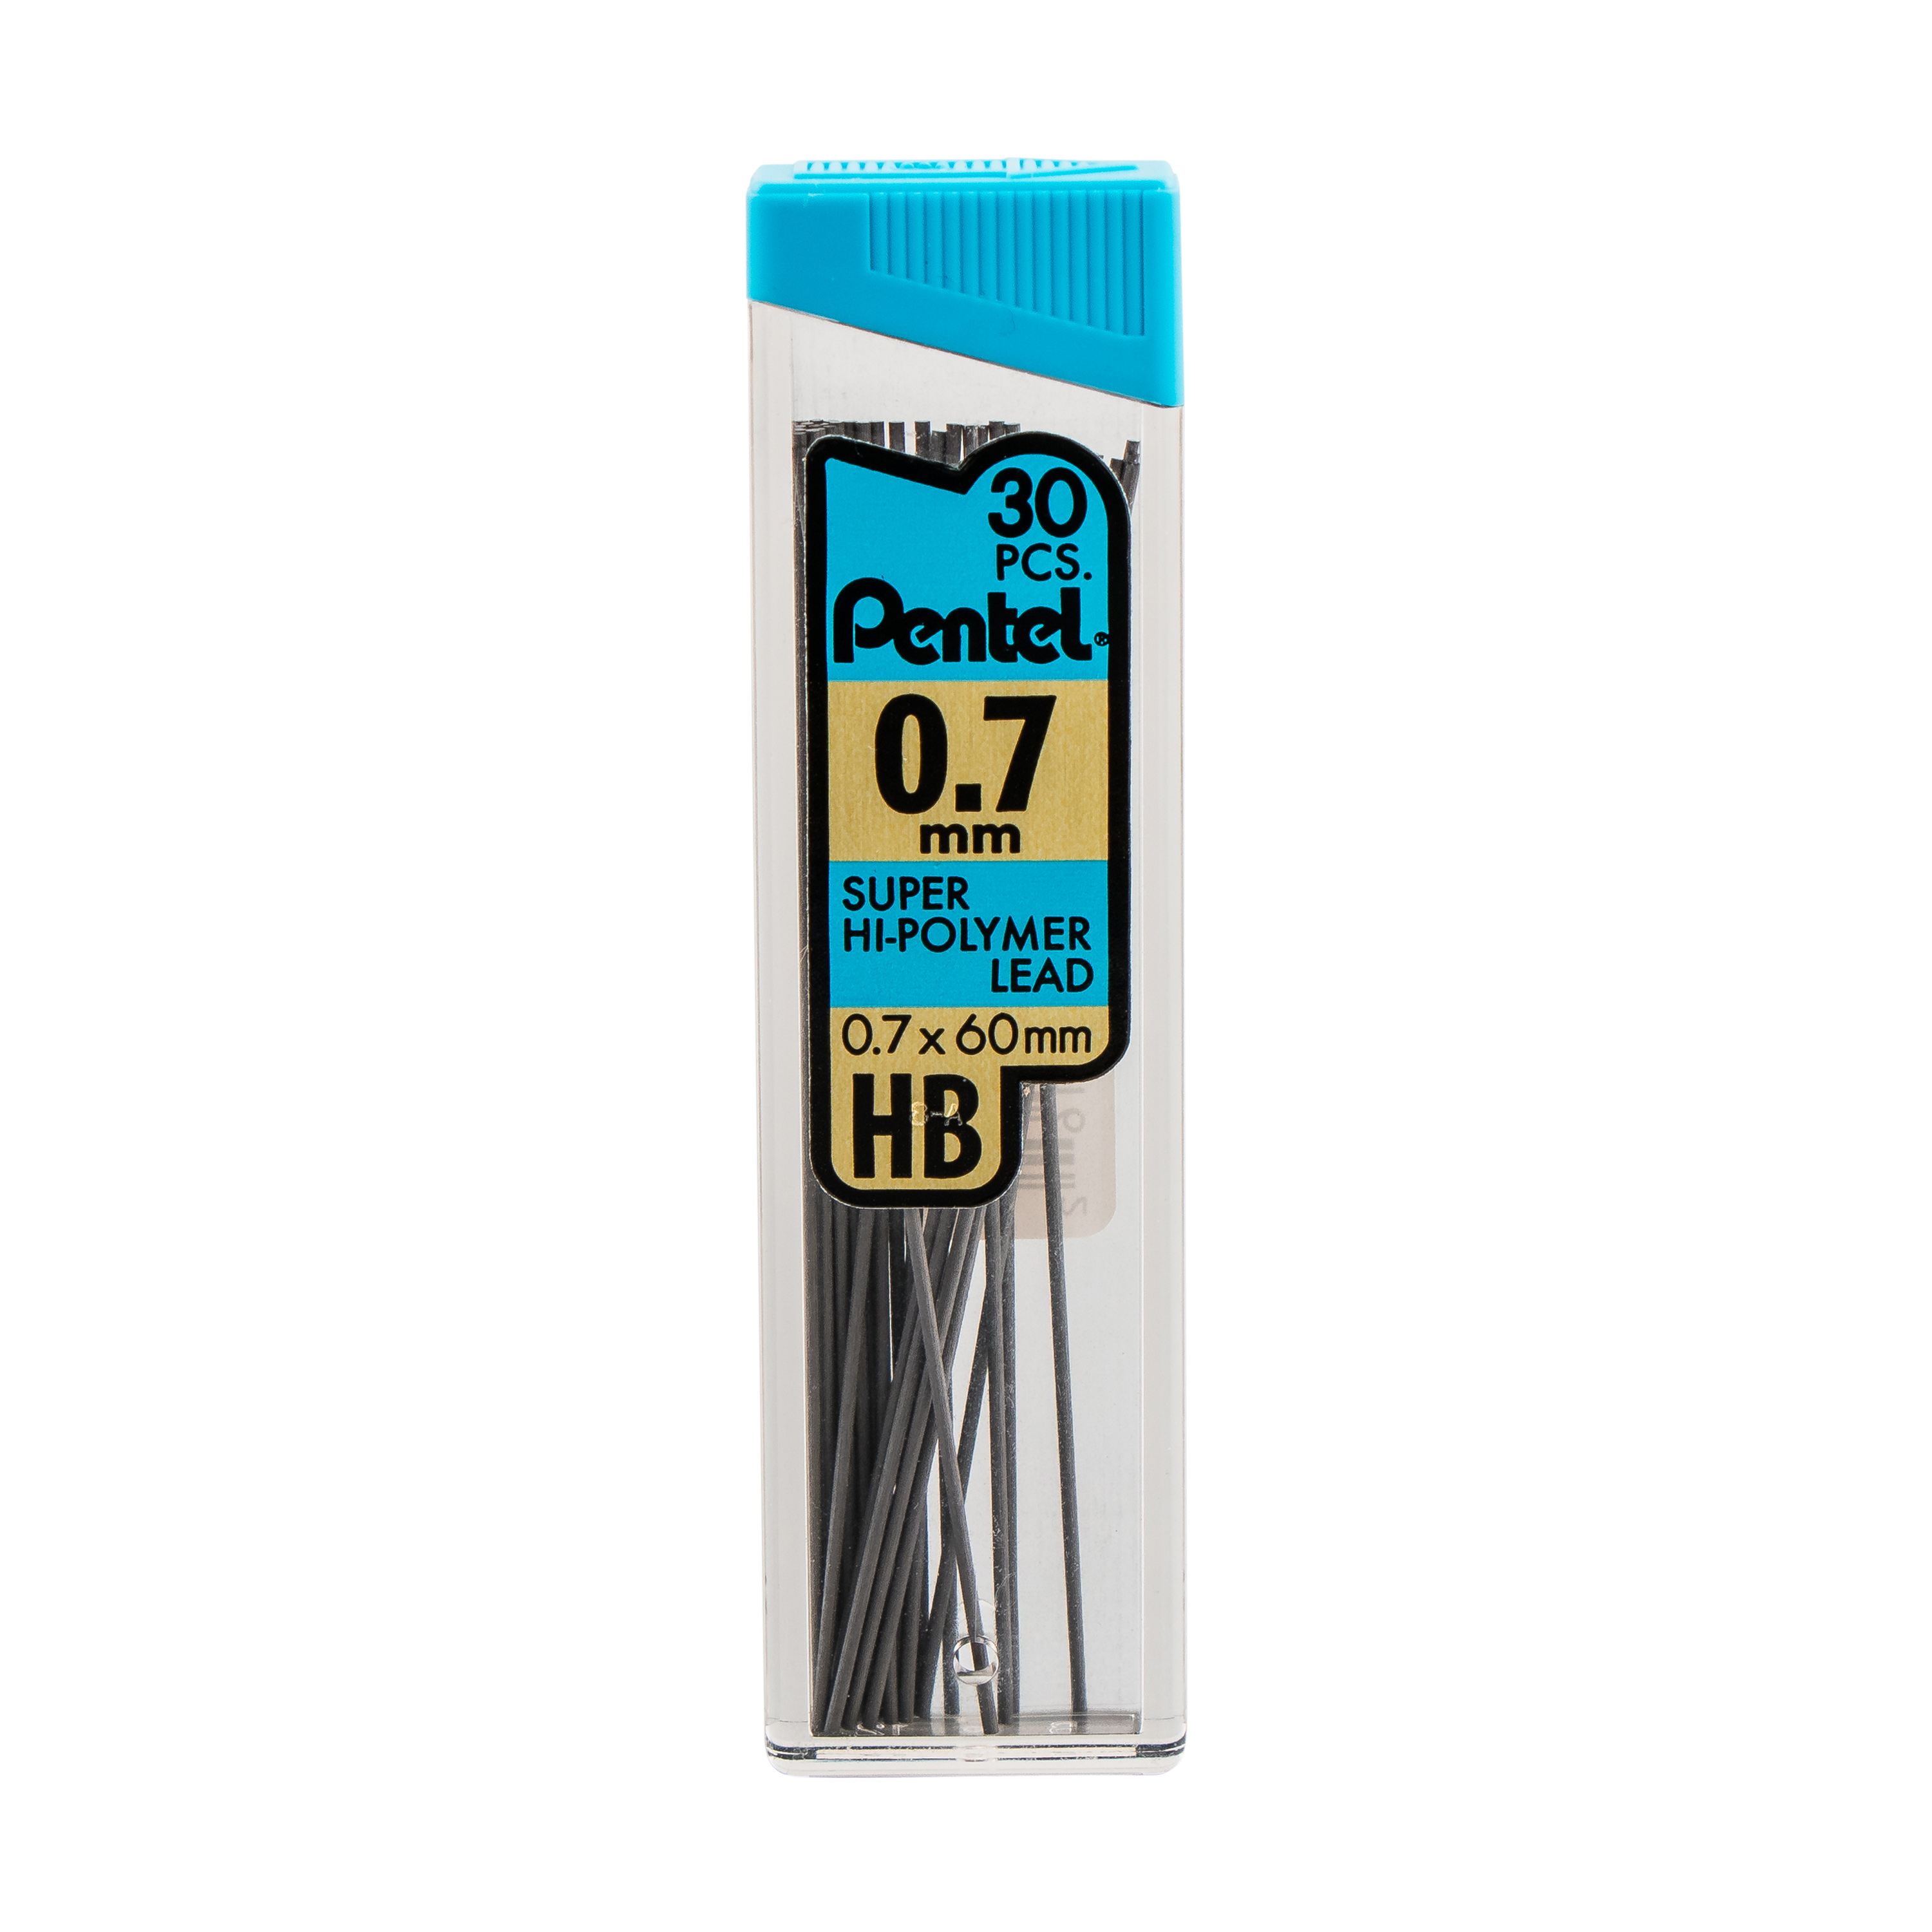 Pentel Super Hi-Polymer Lead Refill (0.7mm) Medium, HB, 30 Pcs/Tube 3 Pack - image 2 of 5